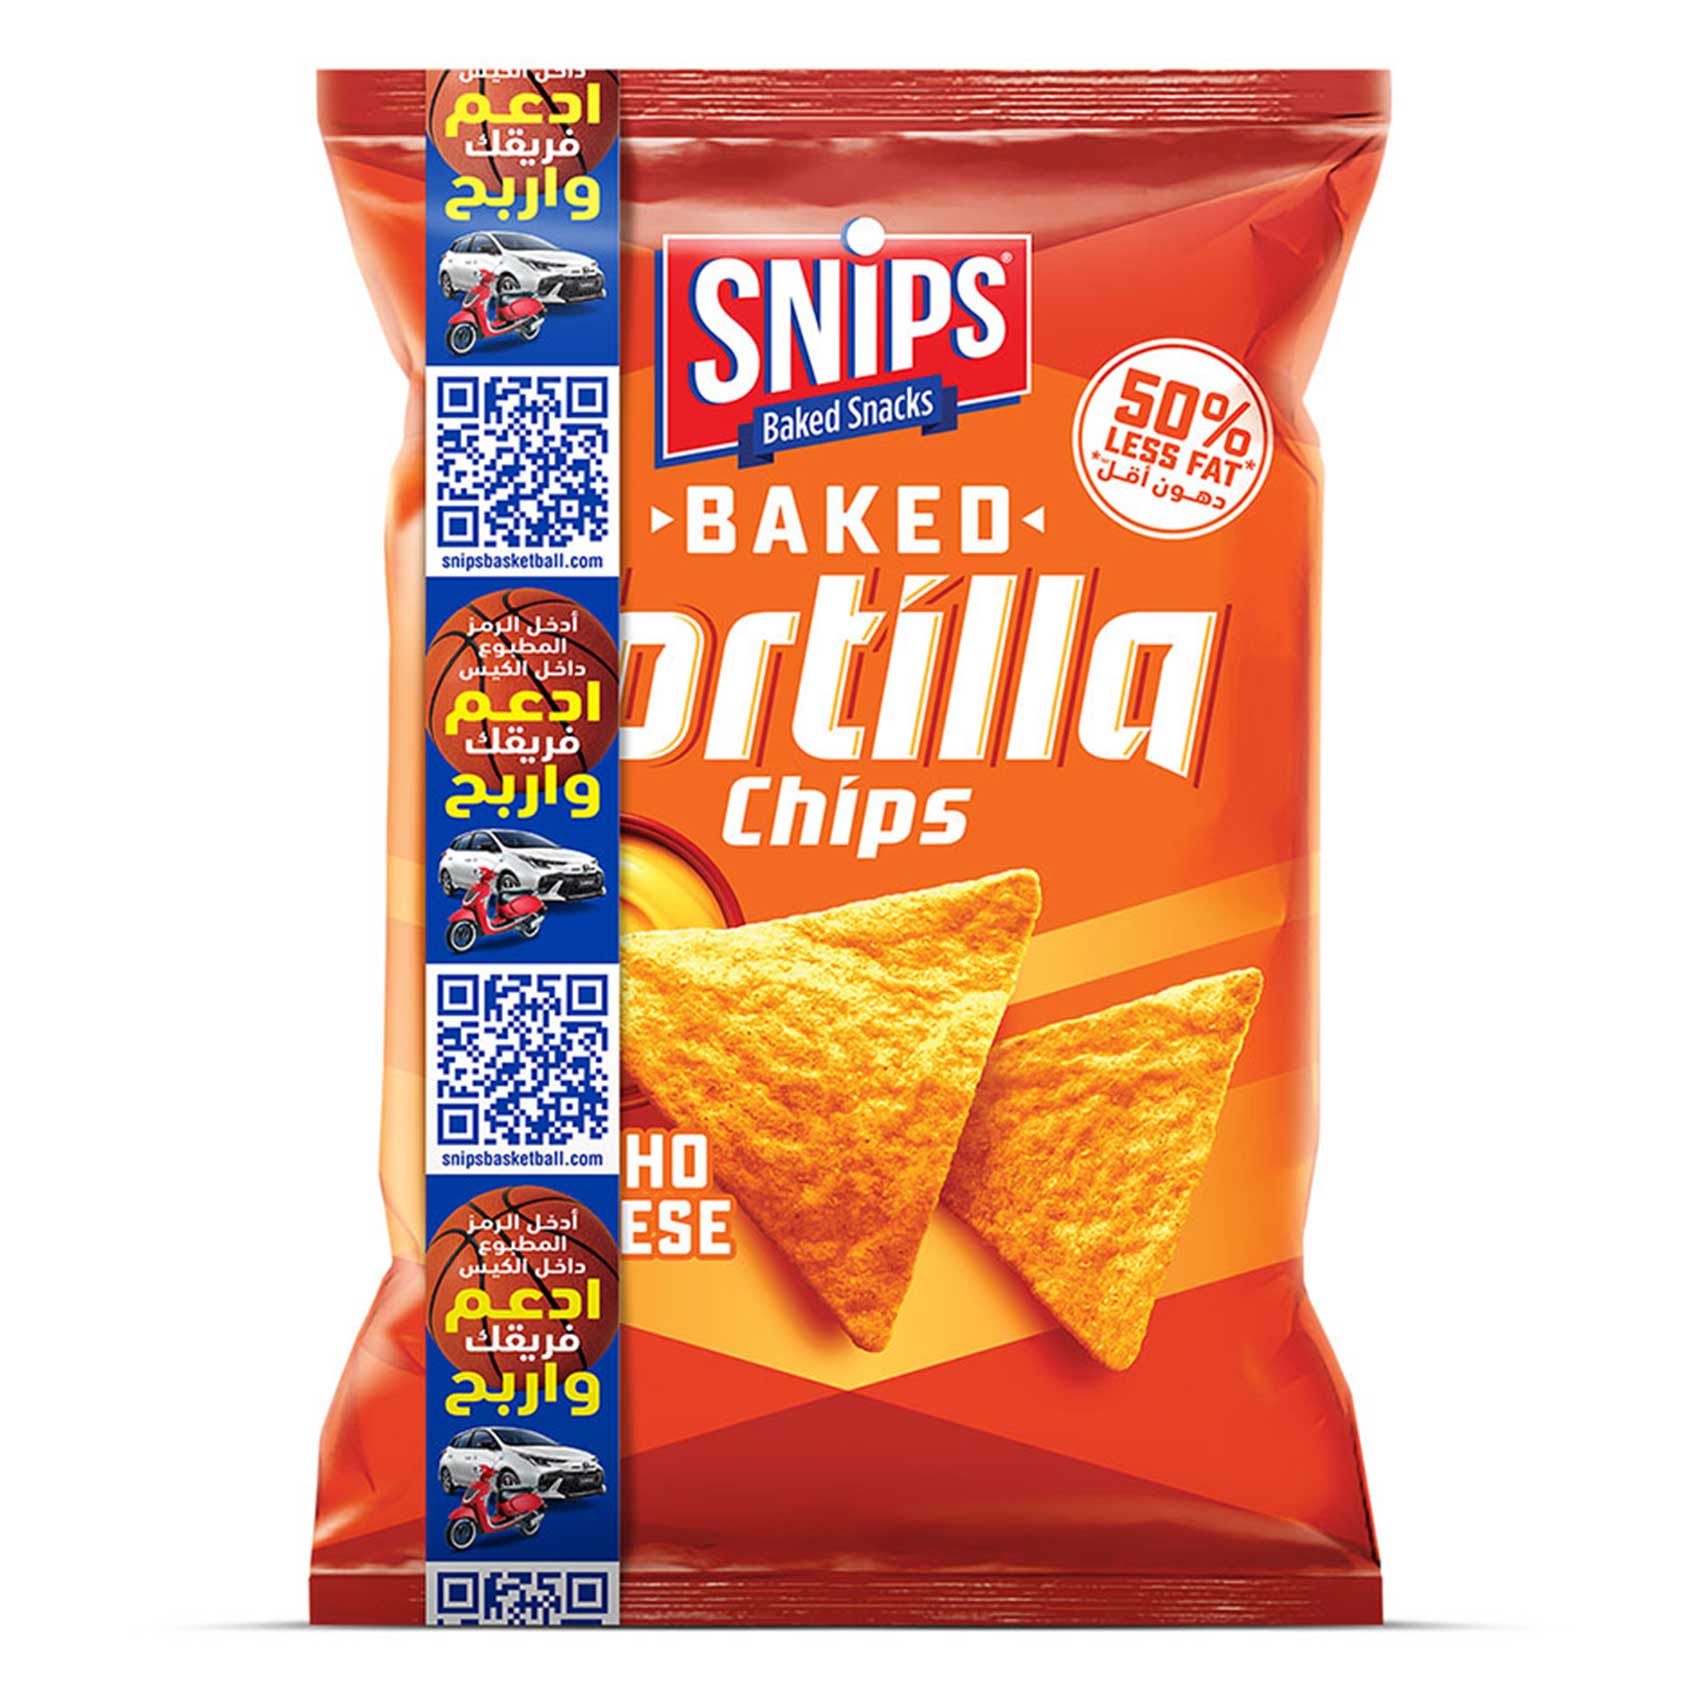 Delicious Snips Salt & Vinegar Baked Chips